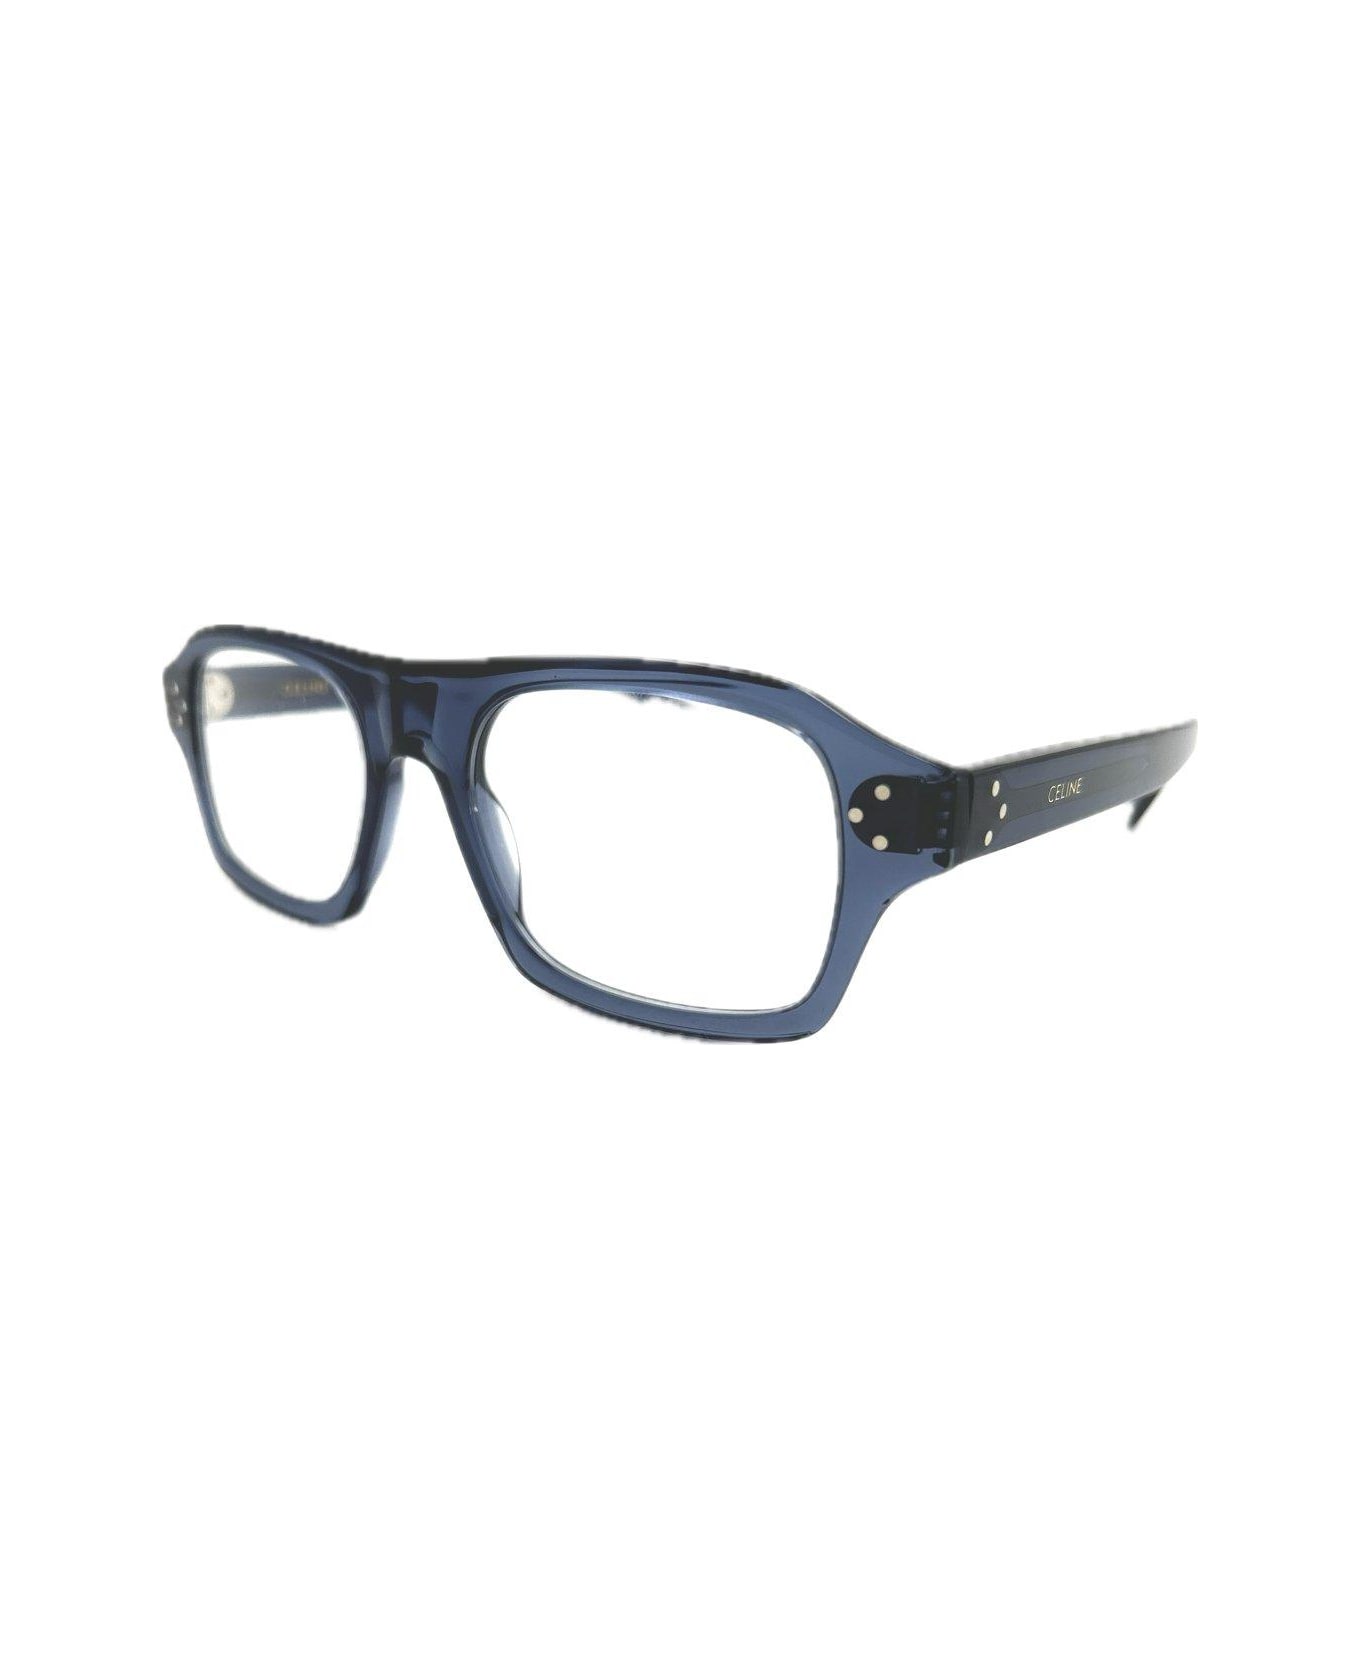 Celine Square Framed Glasses - Blu